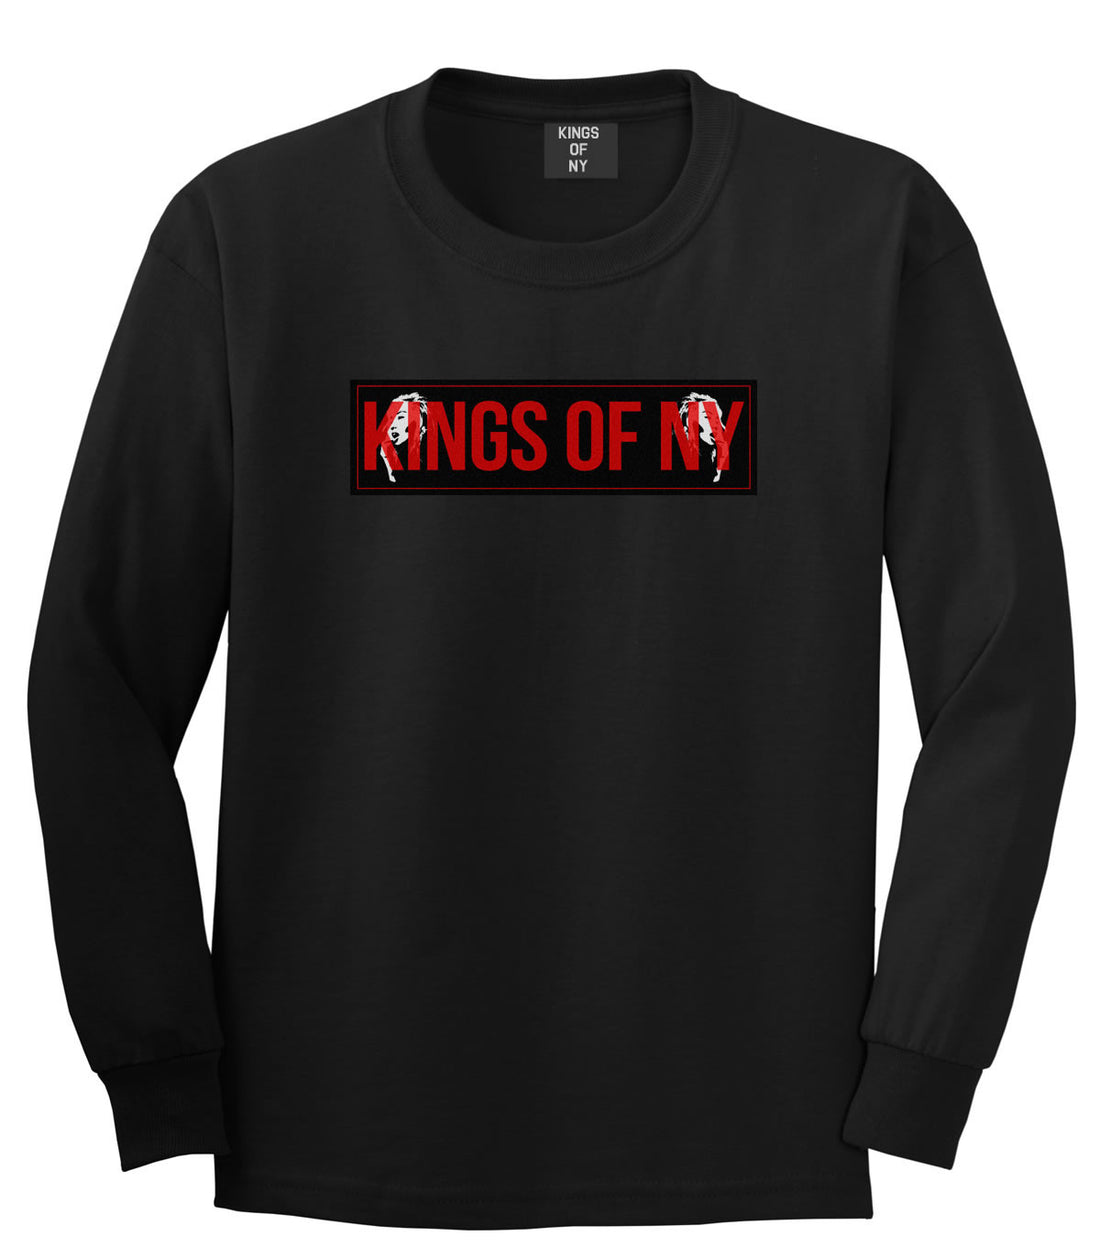 Red Girl Logo Print Boys Kids Long Sleeve T-Shirt in Black by Kings Of NY